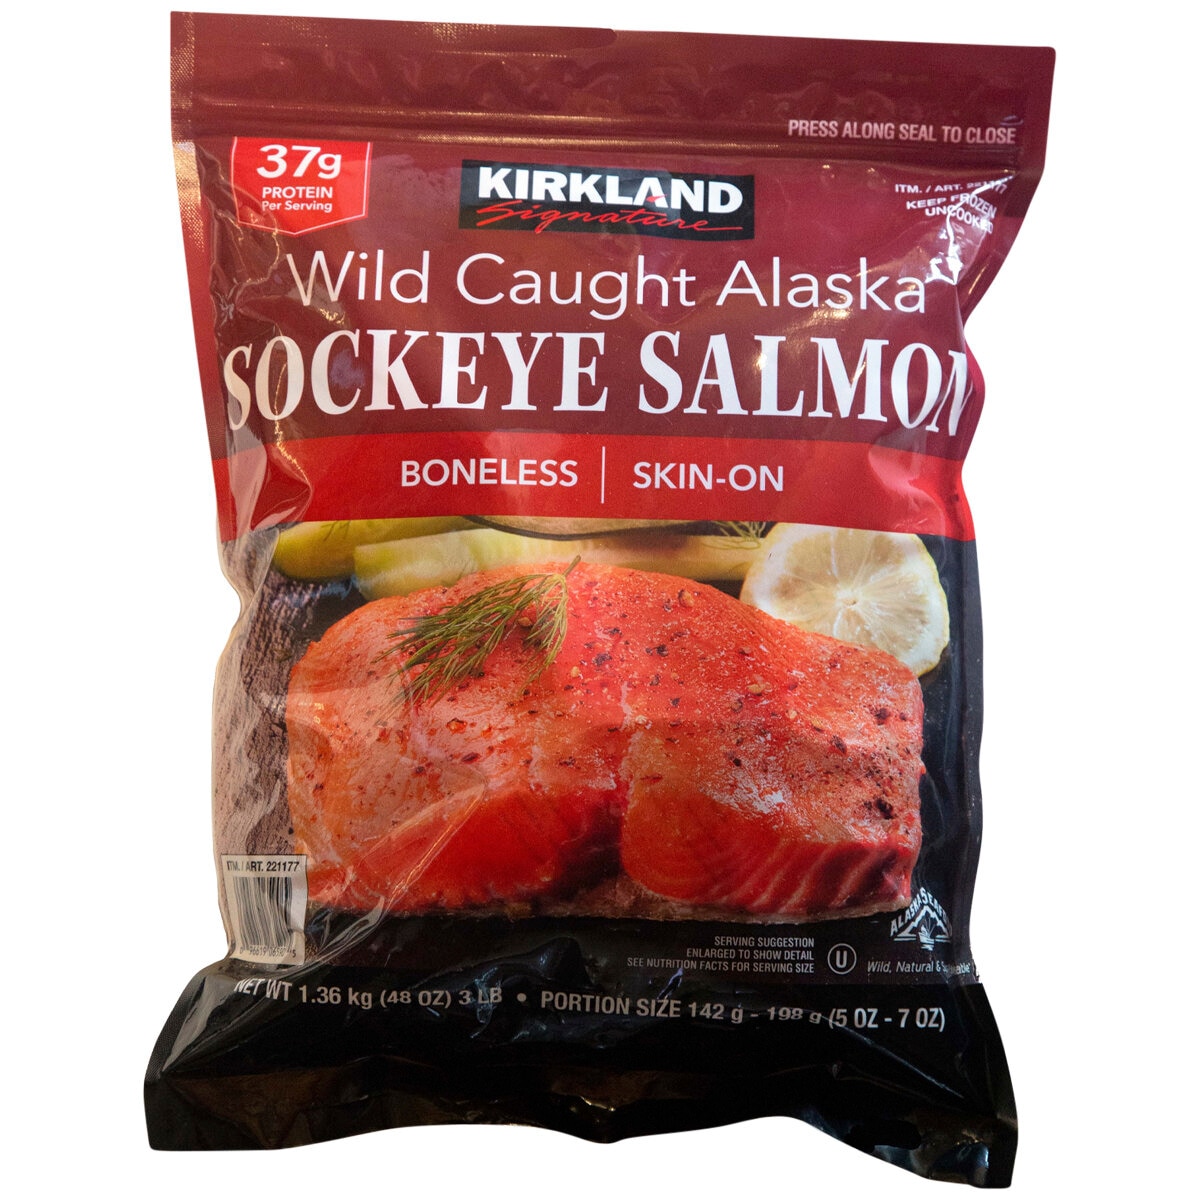 Costco Kirkland Signature Wild Alaskan Sockeye Salmon, 47% OFF